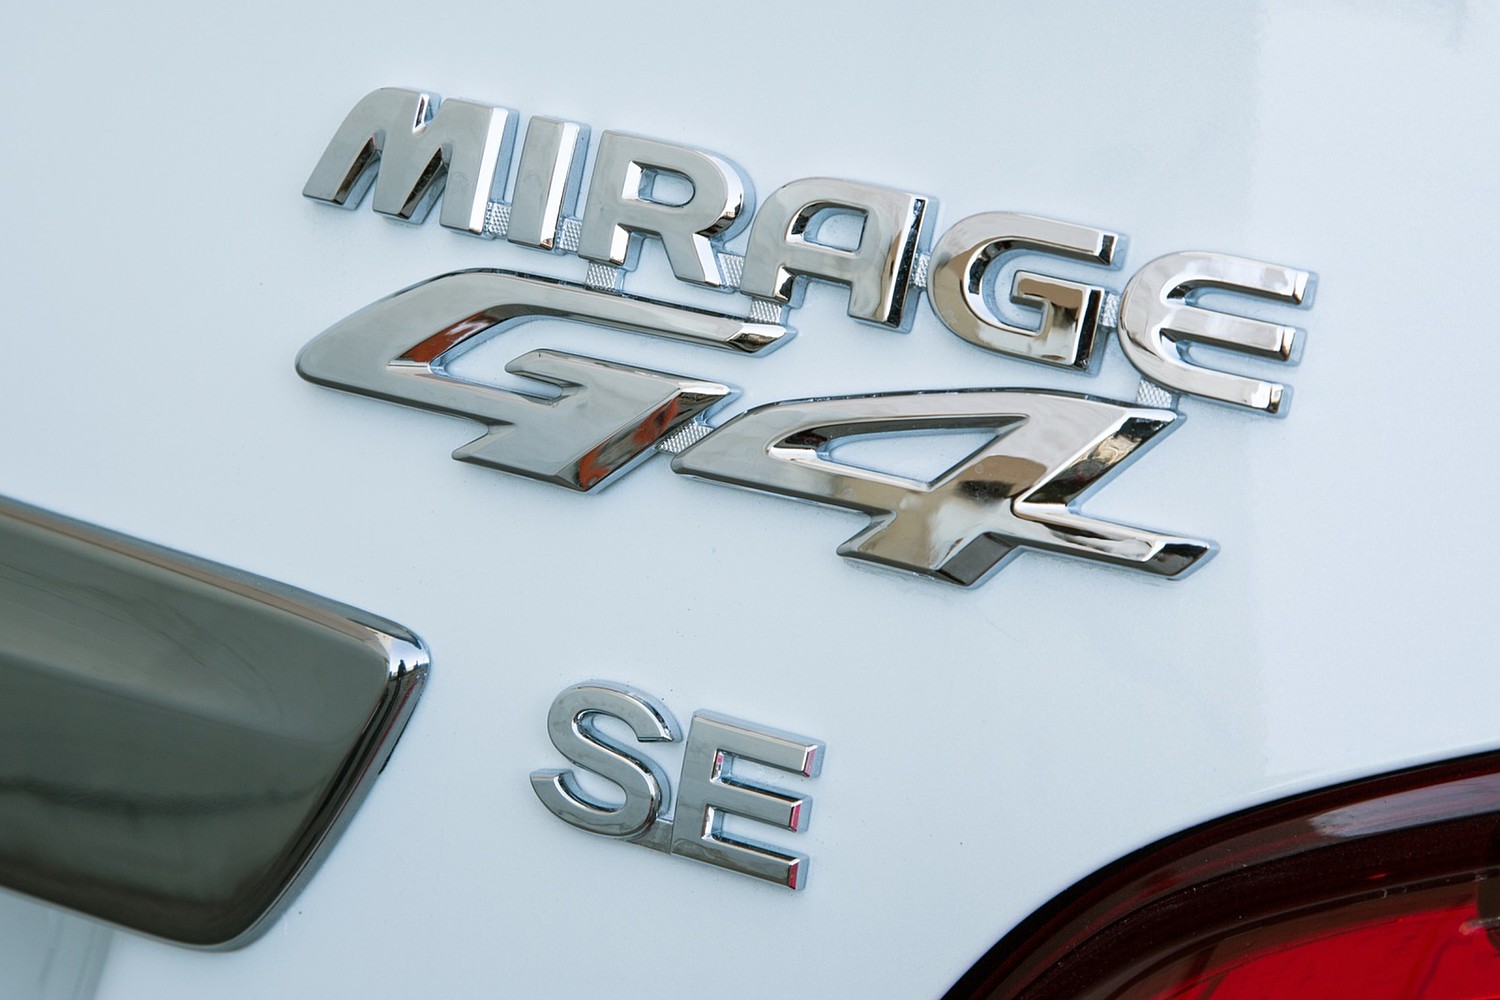 Mitsubishi Mirage G4 SE Sedan Rear Badge (2017 model year shown)